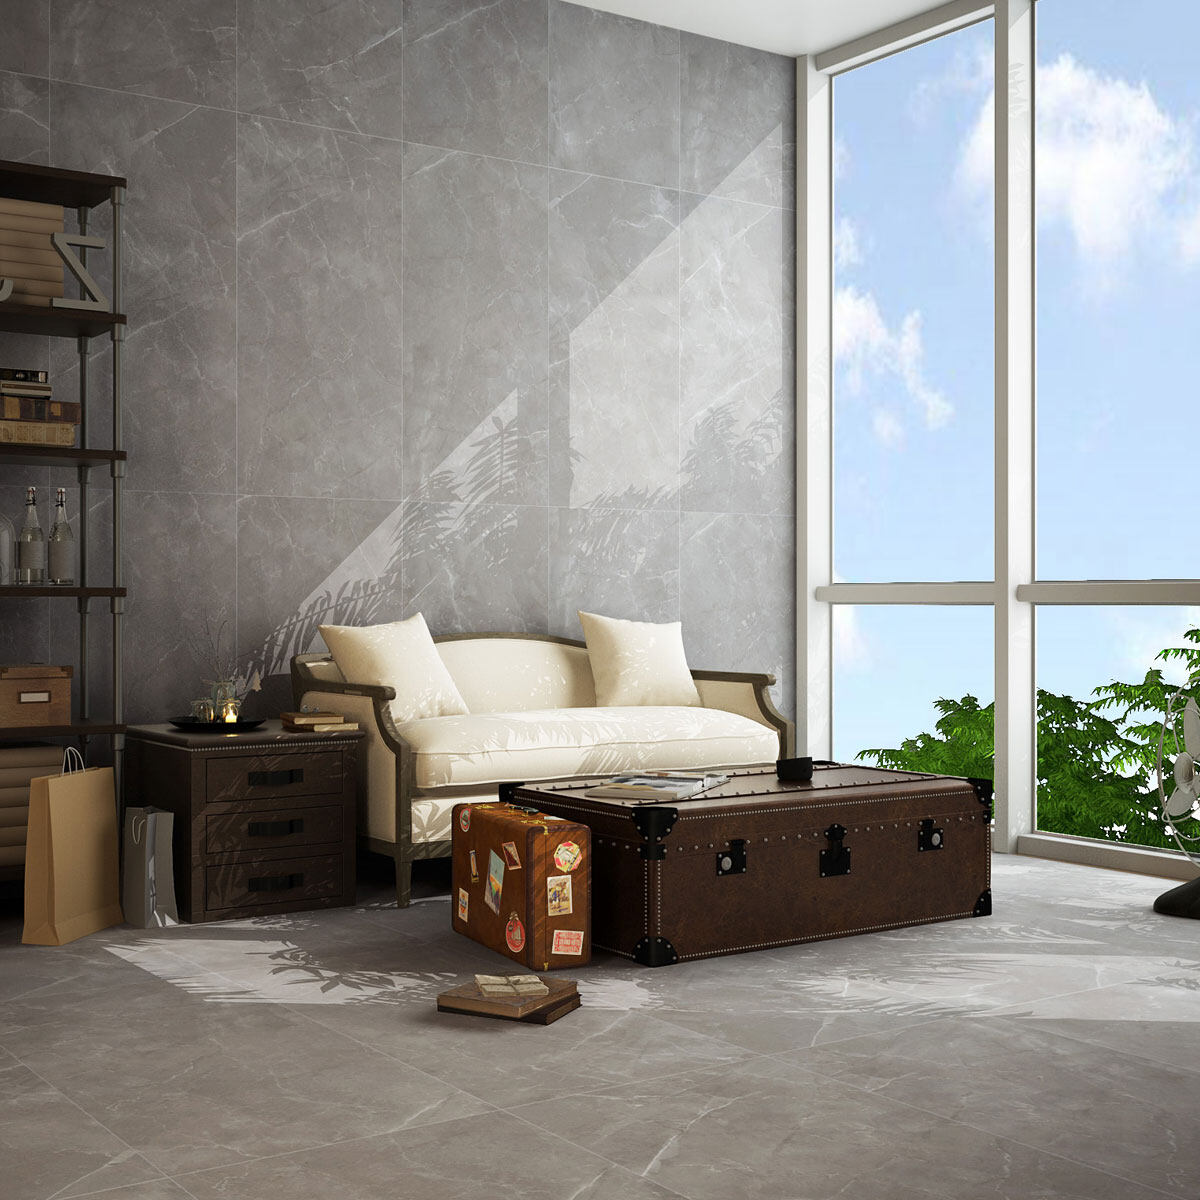 High Quality Flooring tiles BN126H2JA022a